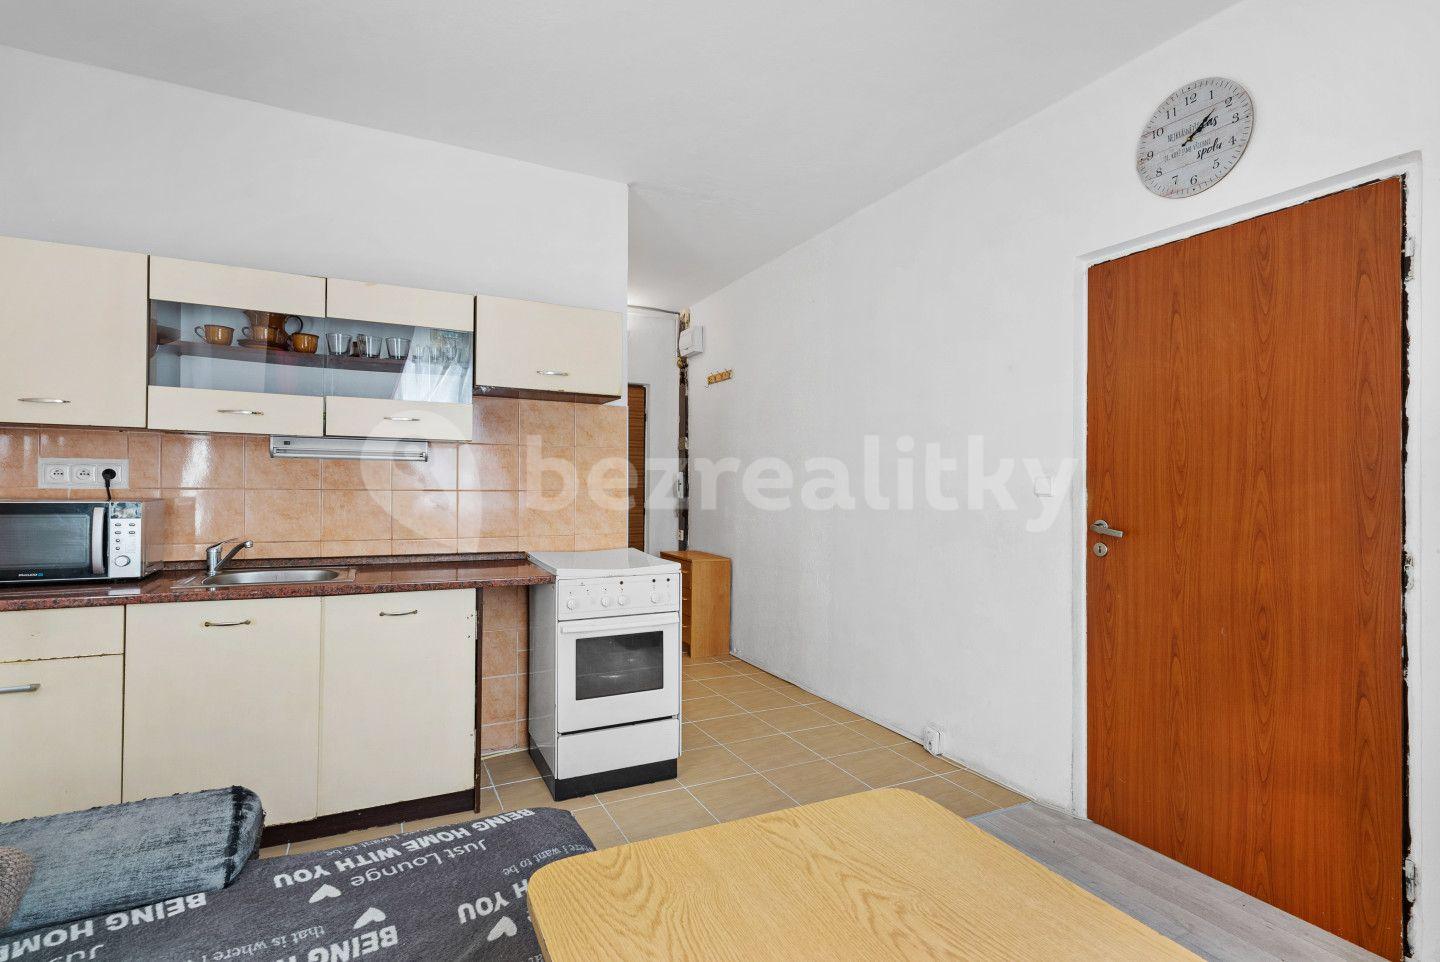 1 bedroom with open-plan kitchen flat for sale, 29 m², Sametová, Liberec, Liberecký Region